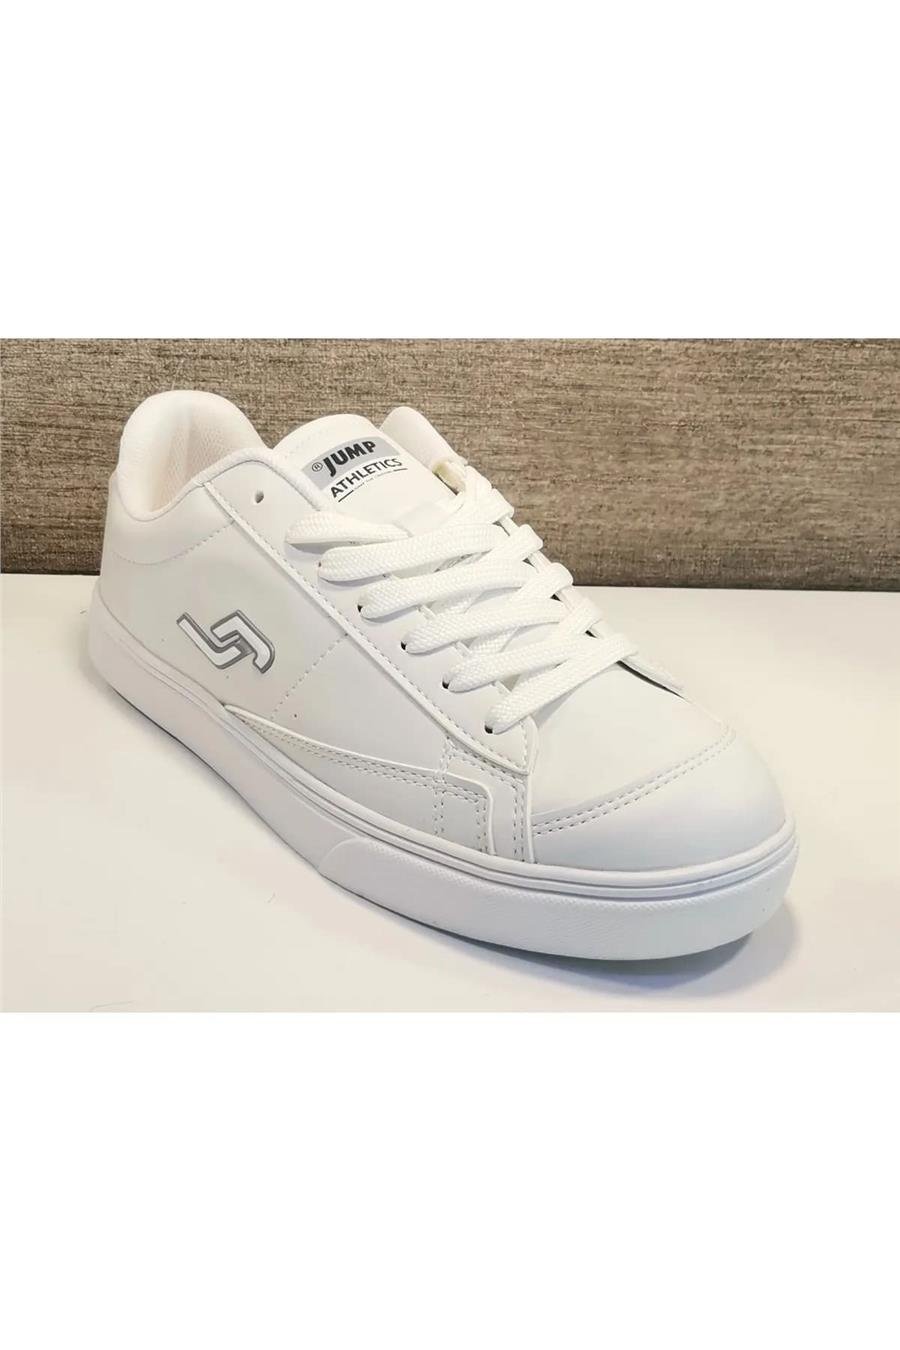 Jump Ja328149121At 28149 A-Beyaz Sneaker Ayakkabı